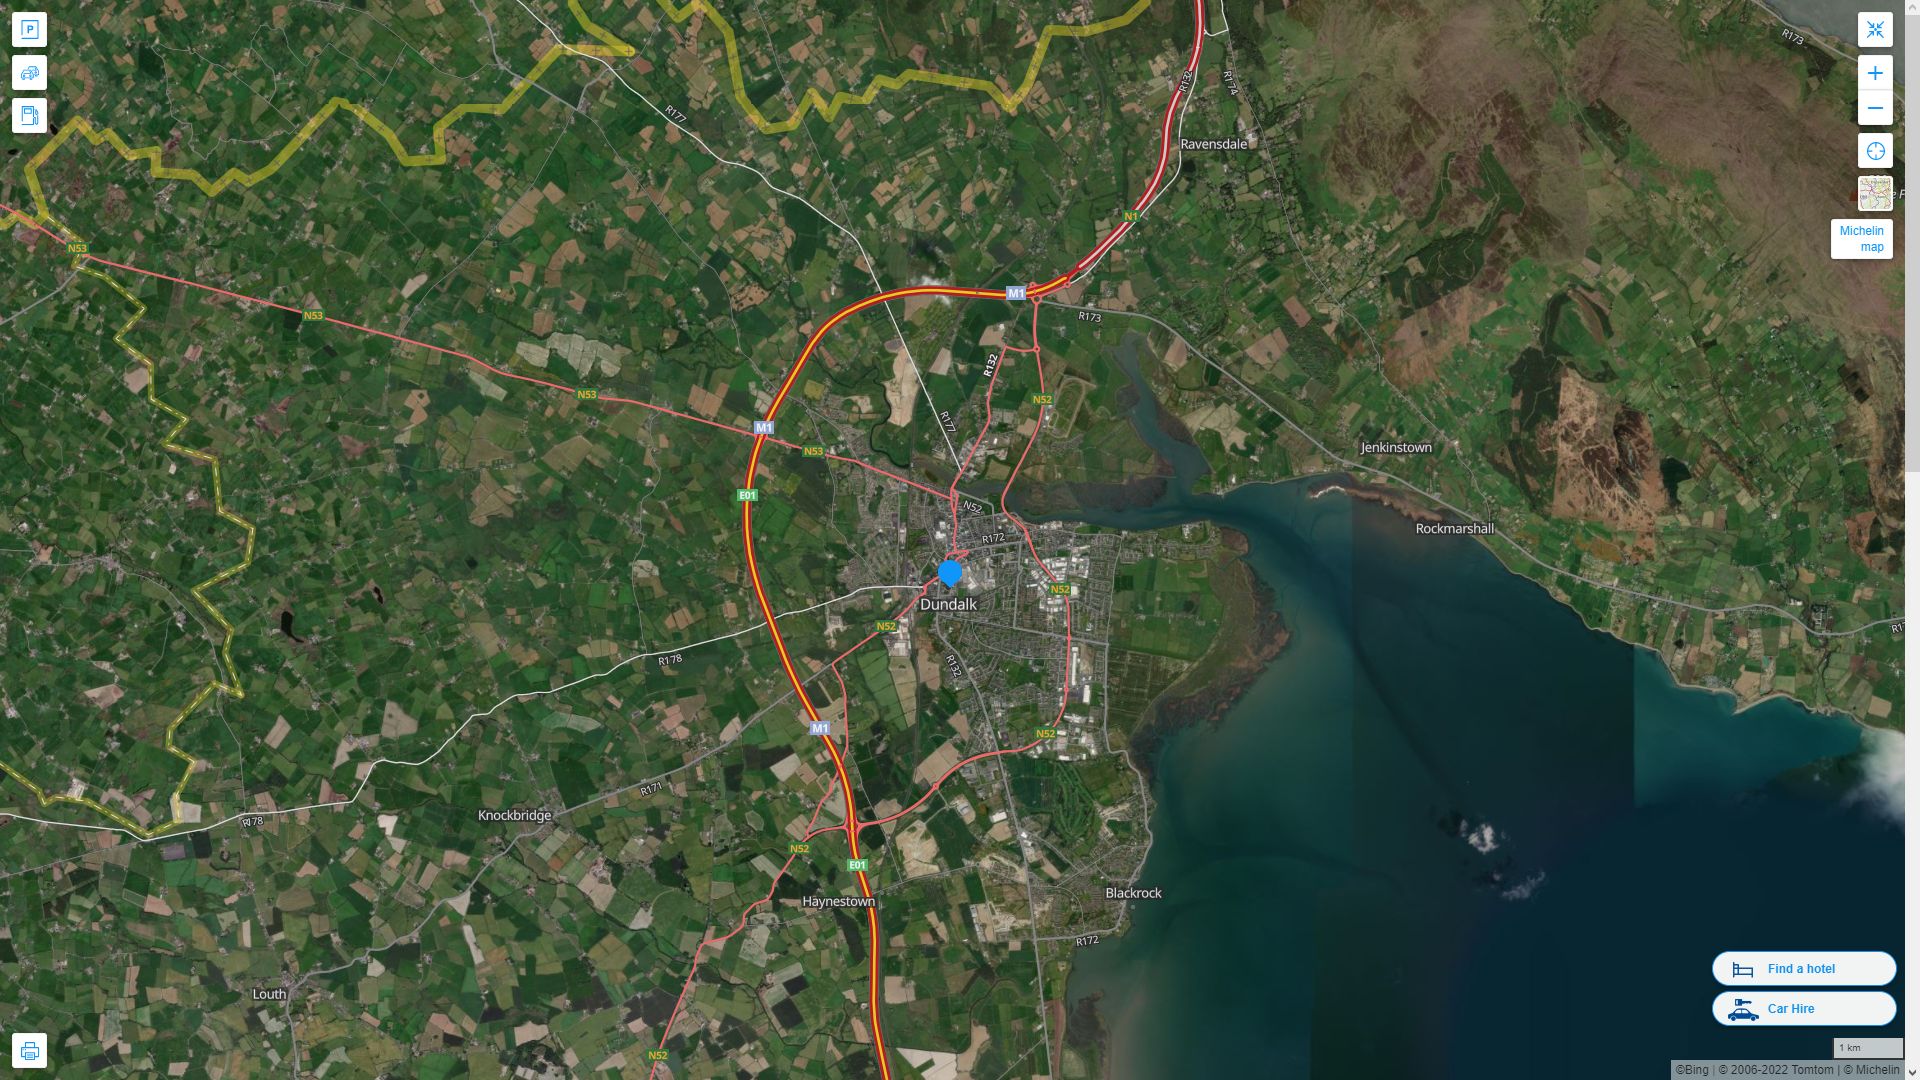 Dundalk Irlande Autoroute et carte routiere avec vue satellite